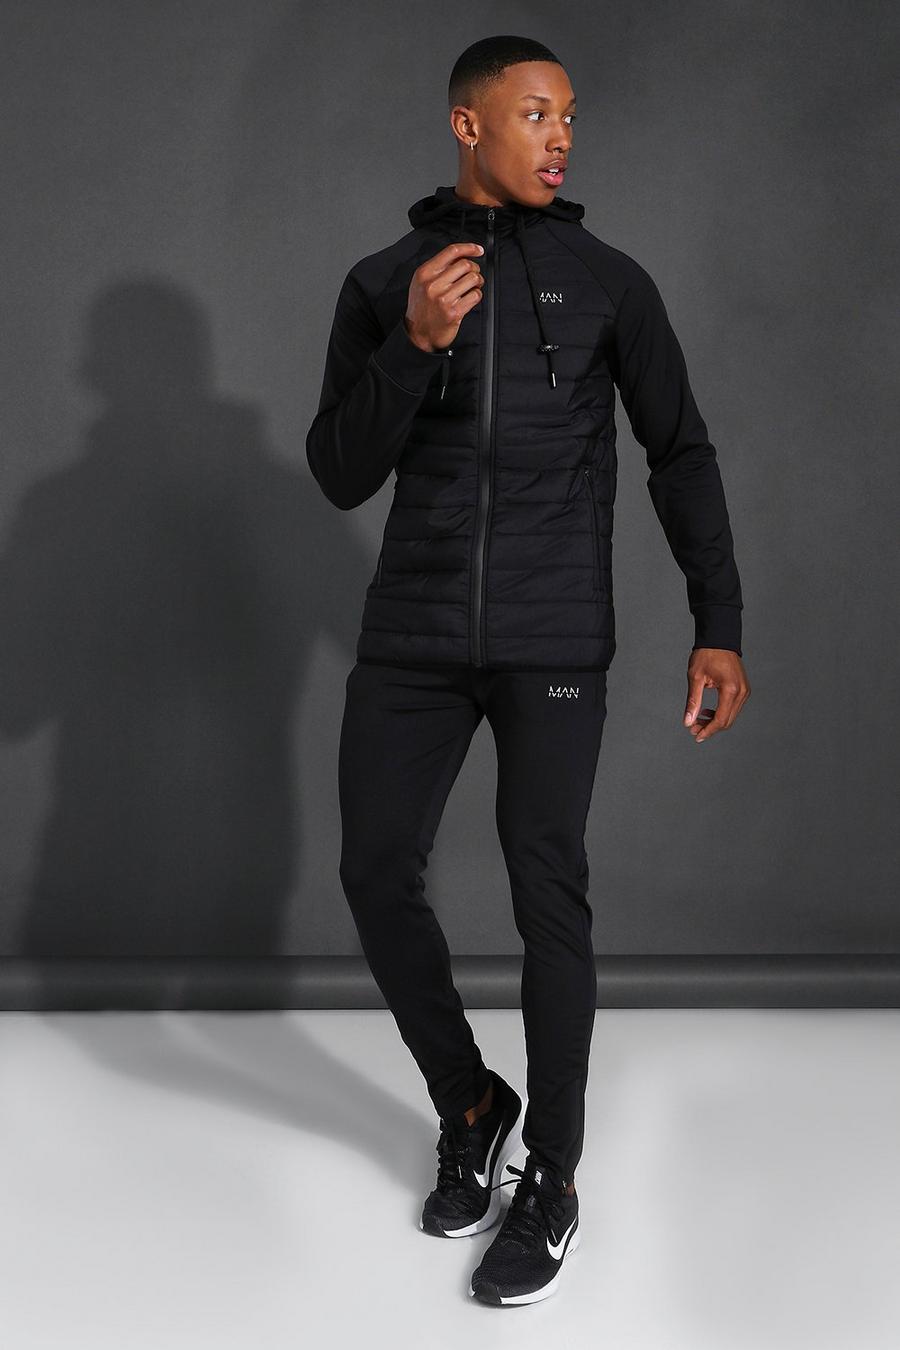 donhobo Mens Tracksuit Set Contrast Cord Jogging Bottoms Hoodies Zip Trousers Gym Sports Suit Sets Joggers Pants Zipper Pockets 